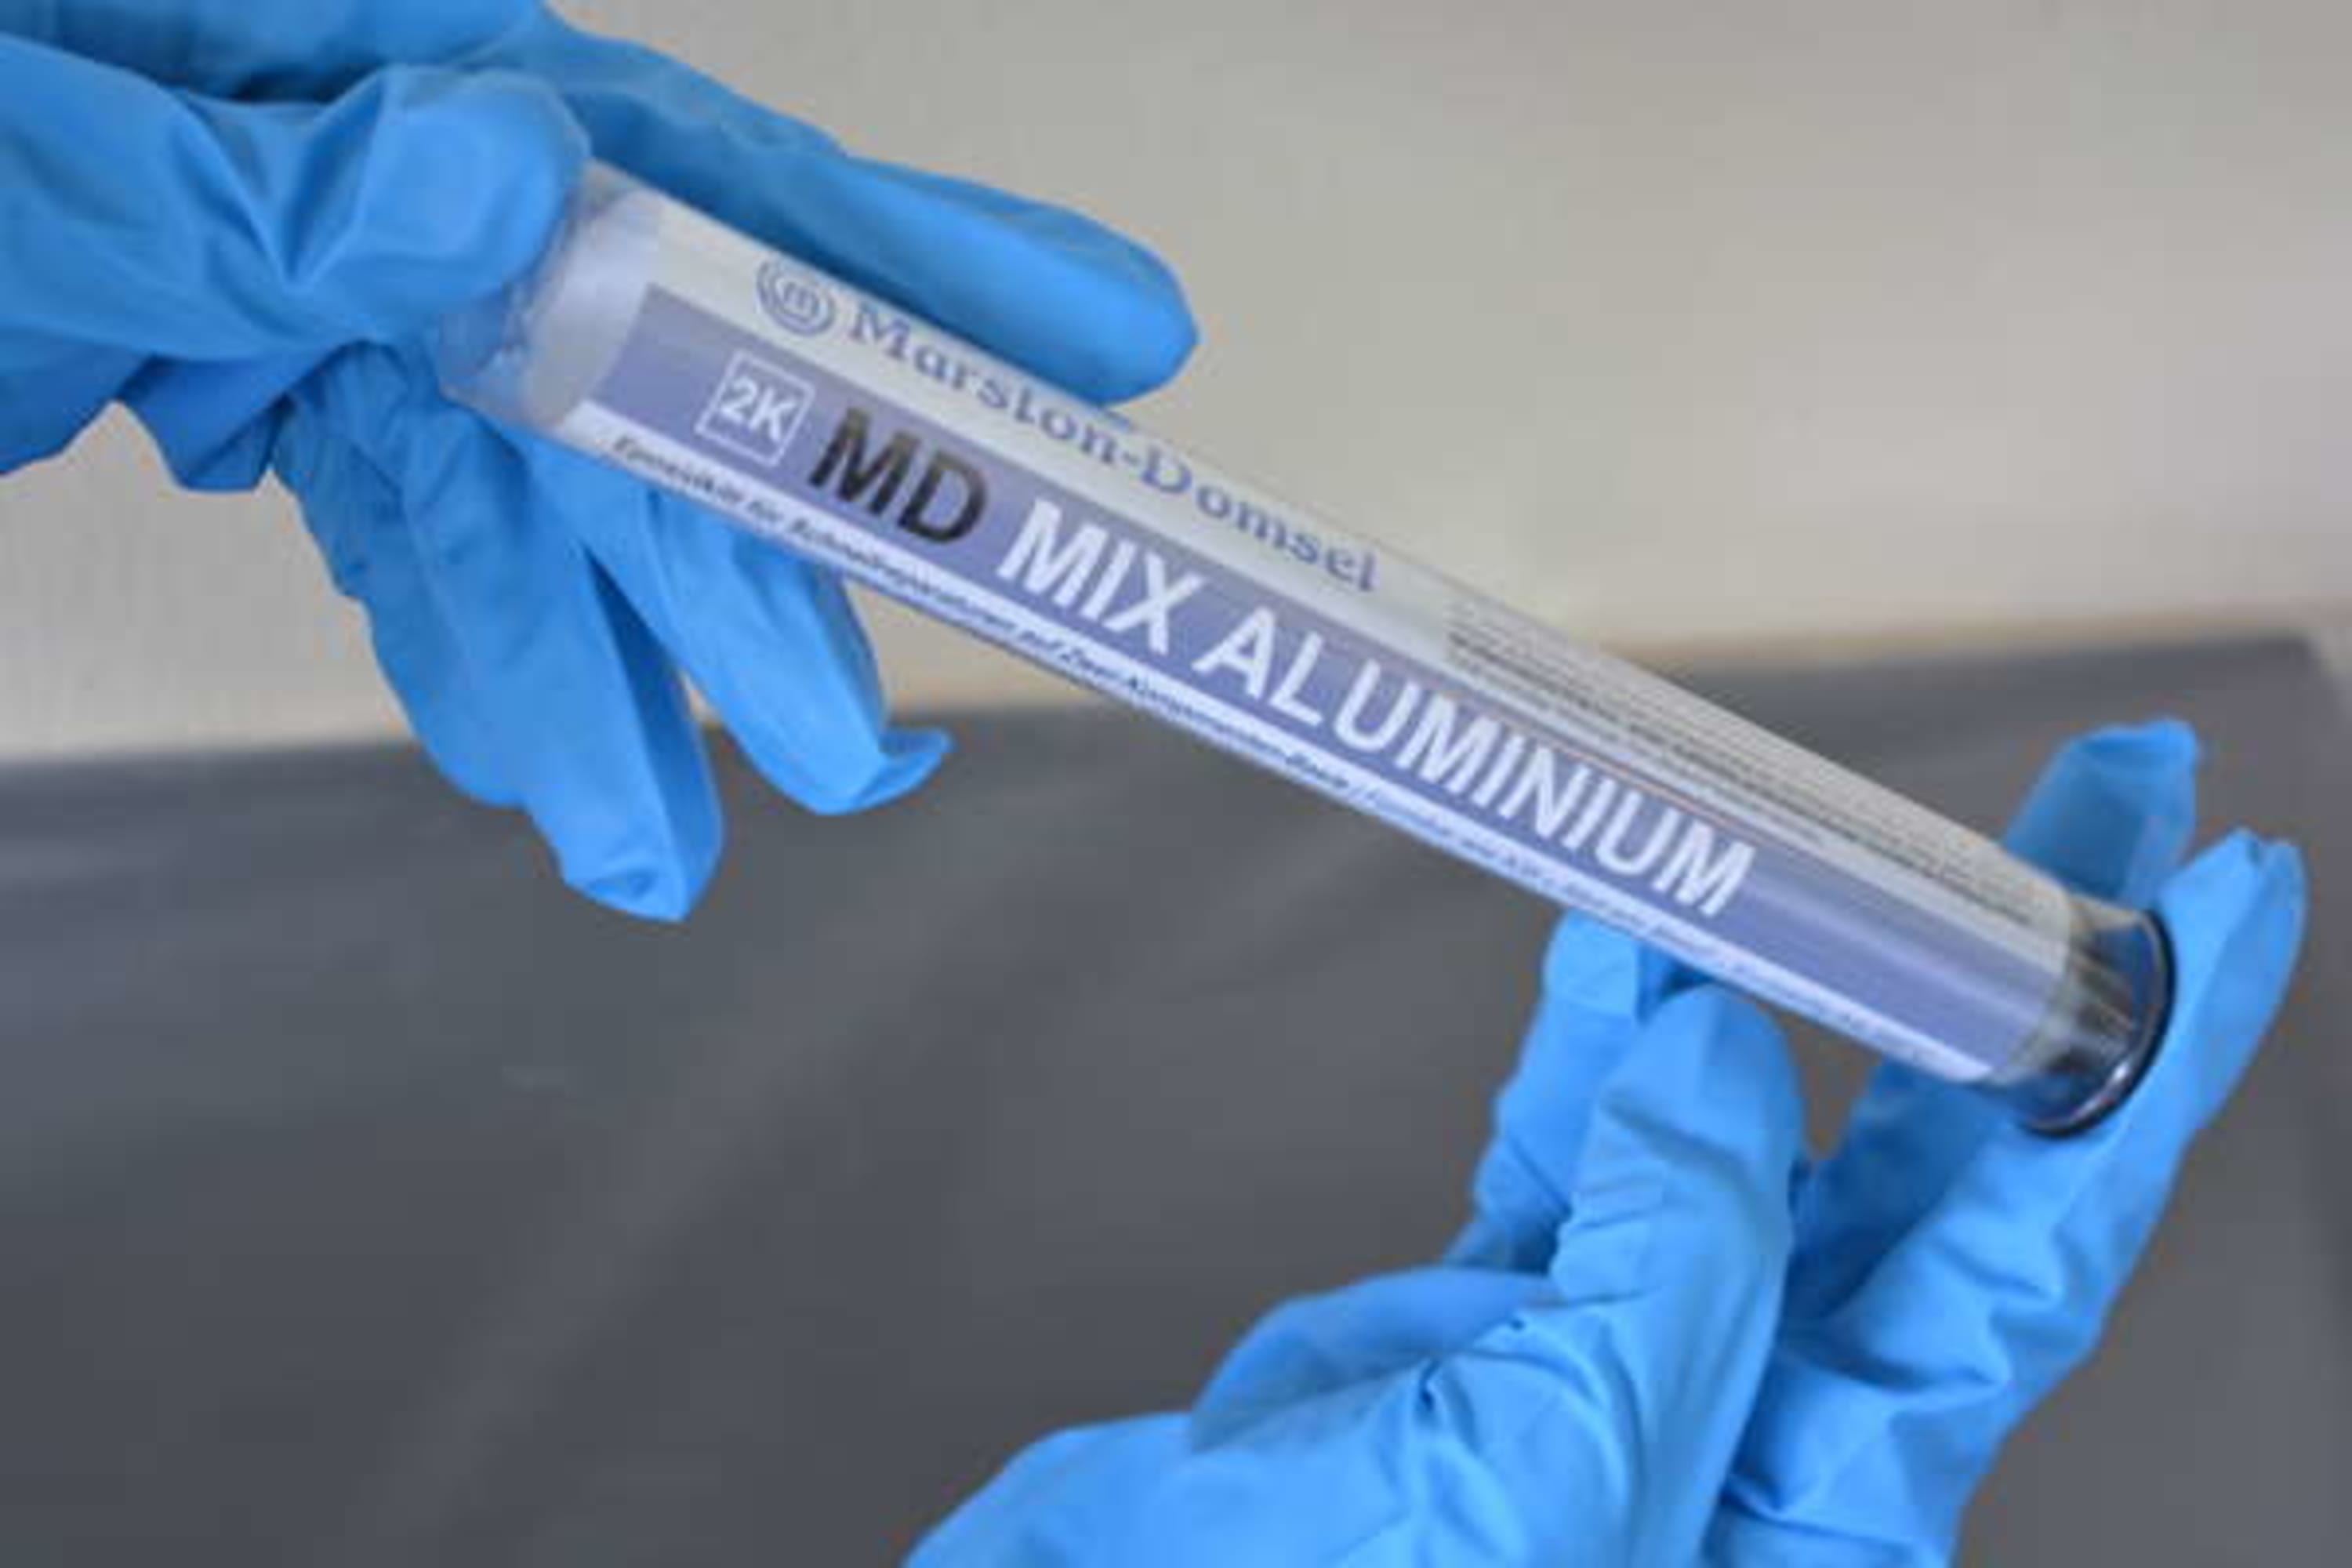 MD MIX aluminium, 2K Repair putty, 115 g, image 11